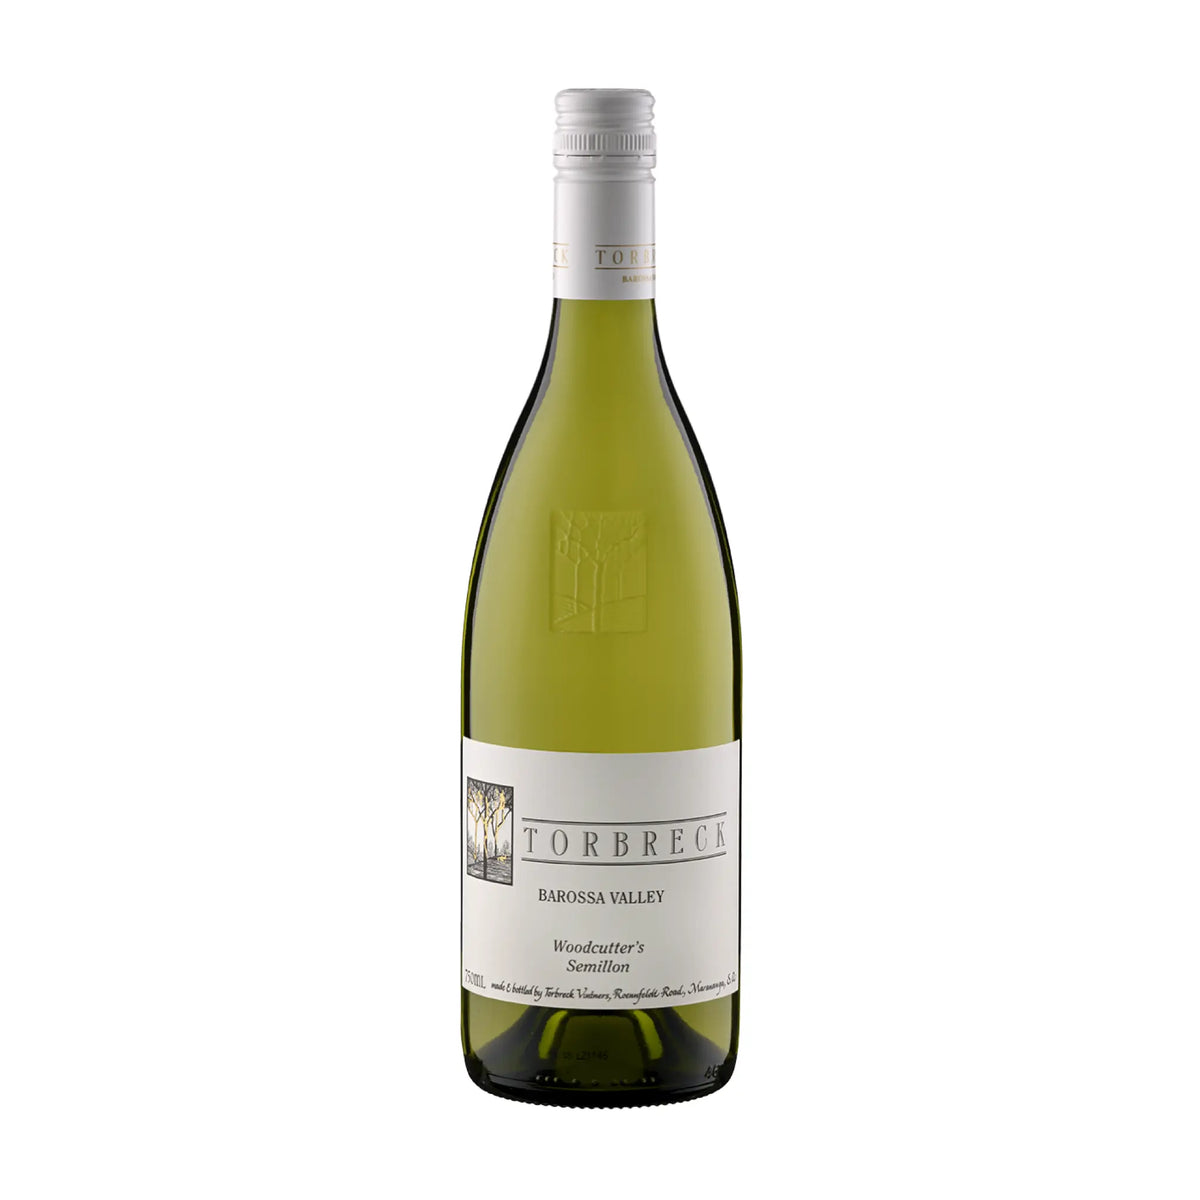 Torbreck Vintners-Weißwein-Semillon-Australien-Barossa Valley-2021 Woodcutter's Sémillon-WINECOM